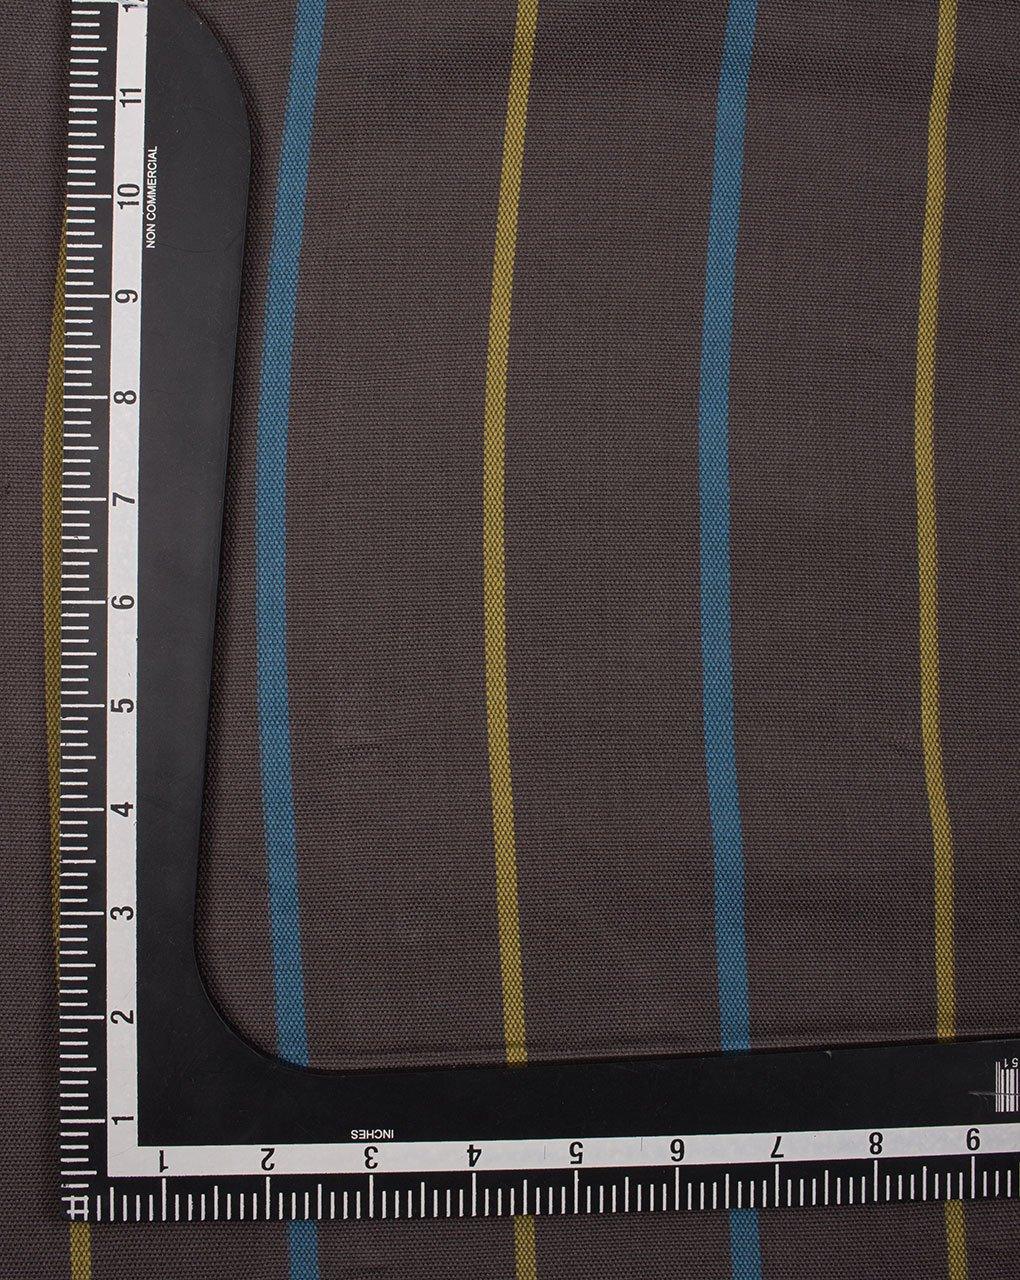 ( Pre-Cut 1.25 MTR ) Grey Yellow Stripes Woven Pure Handloom Cotton Fabric - Fabriclore.com